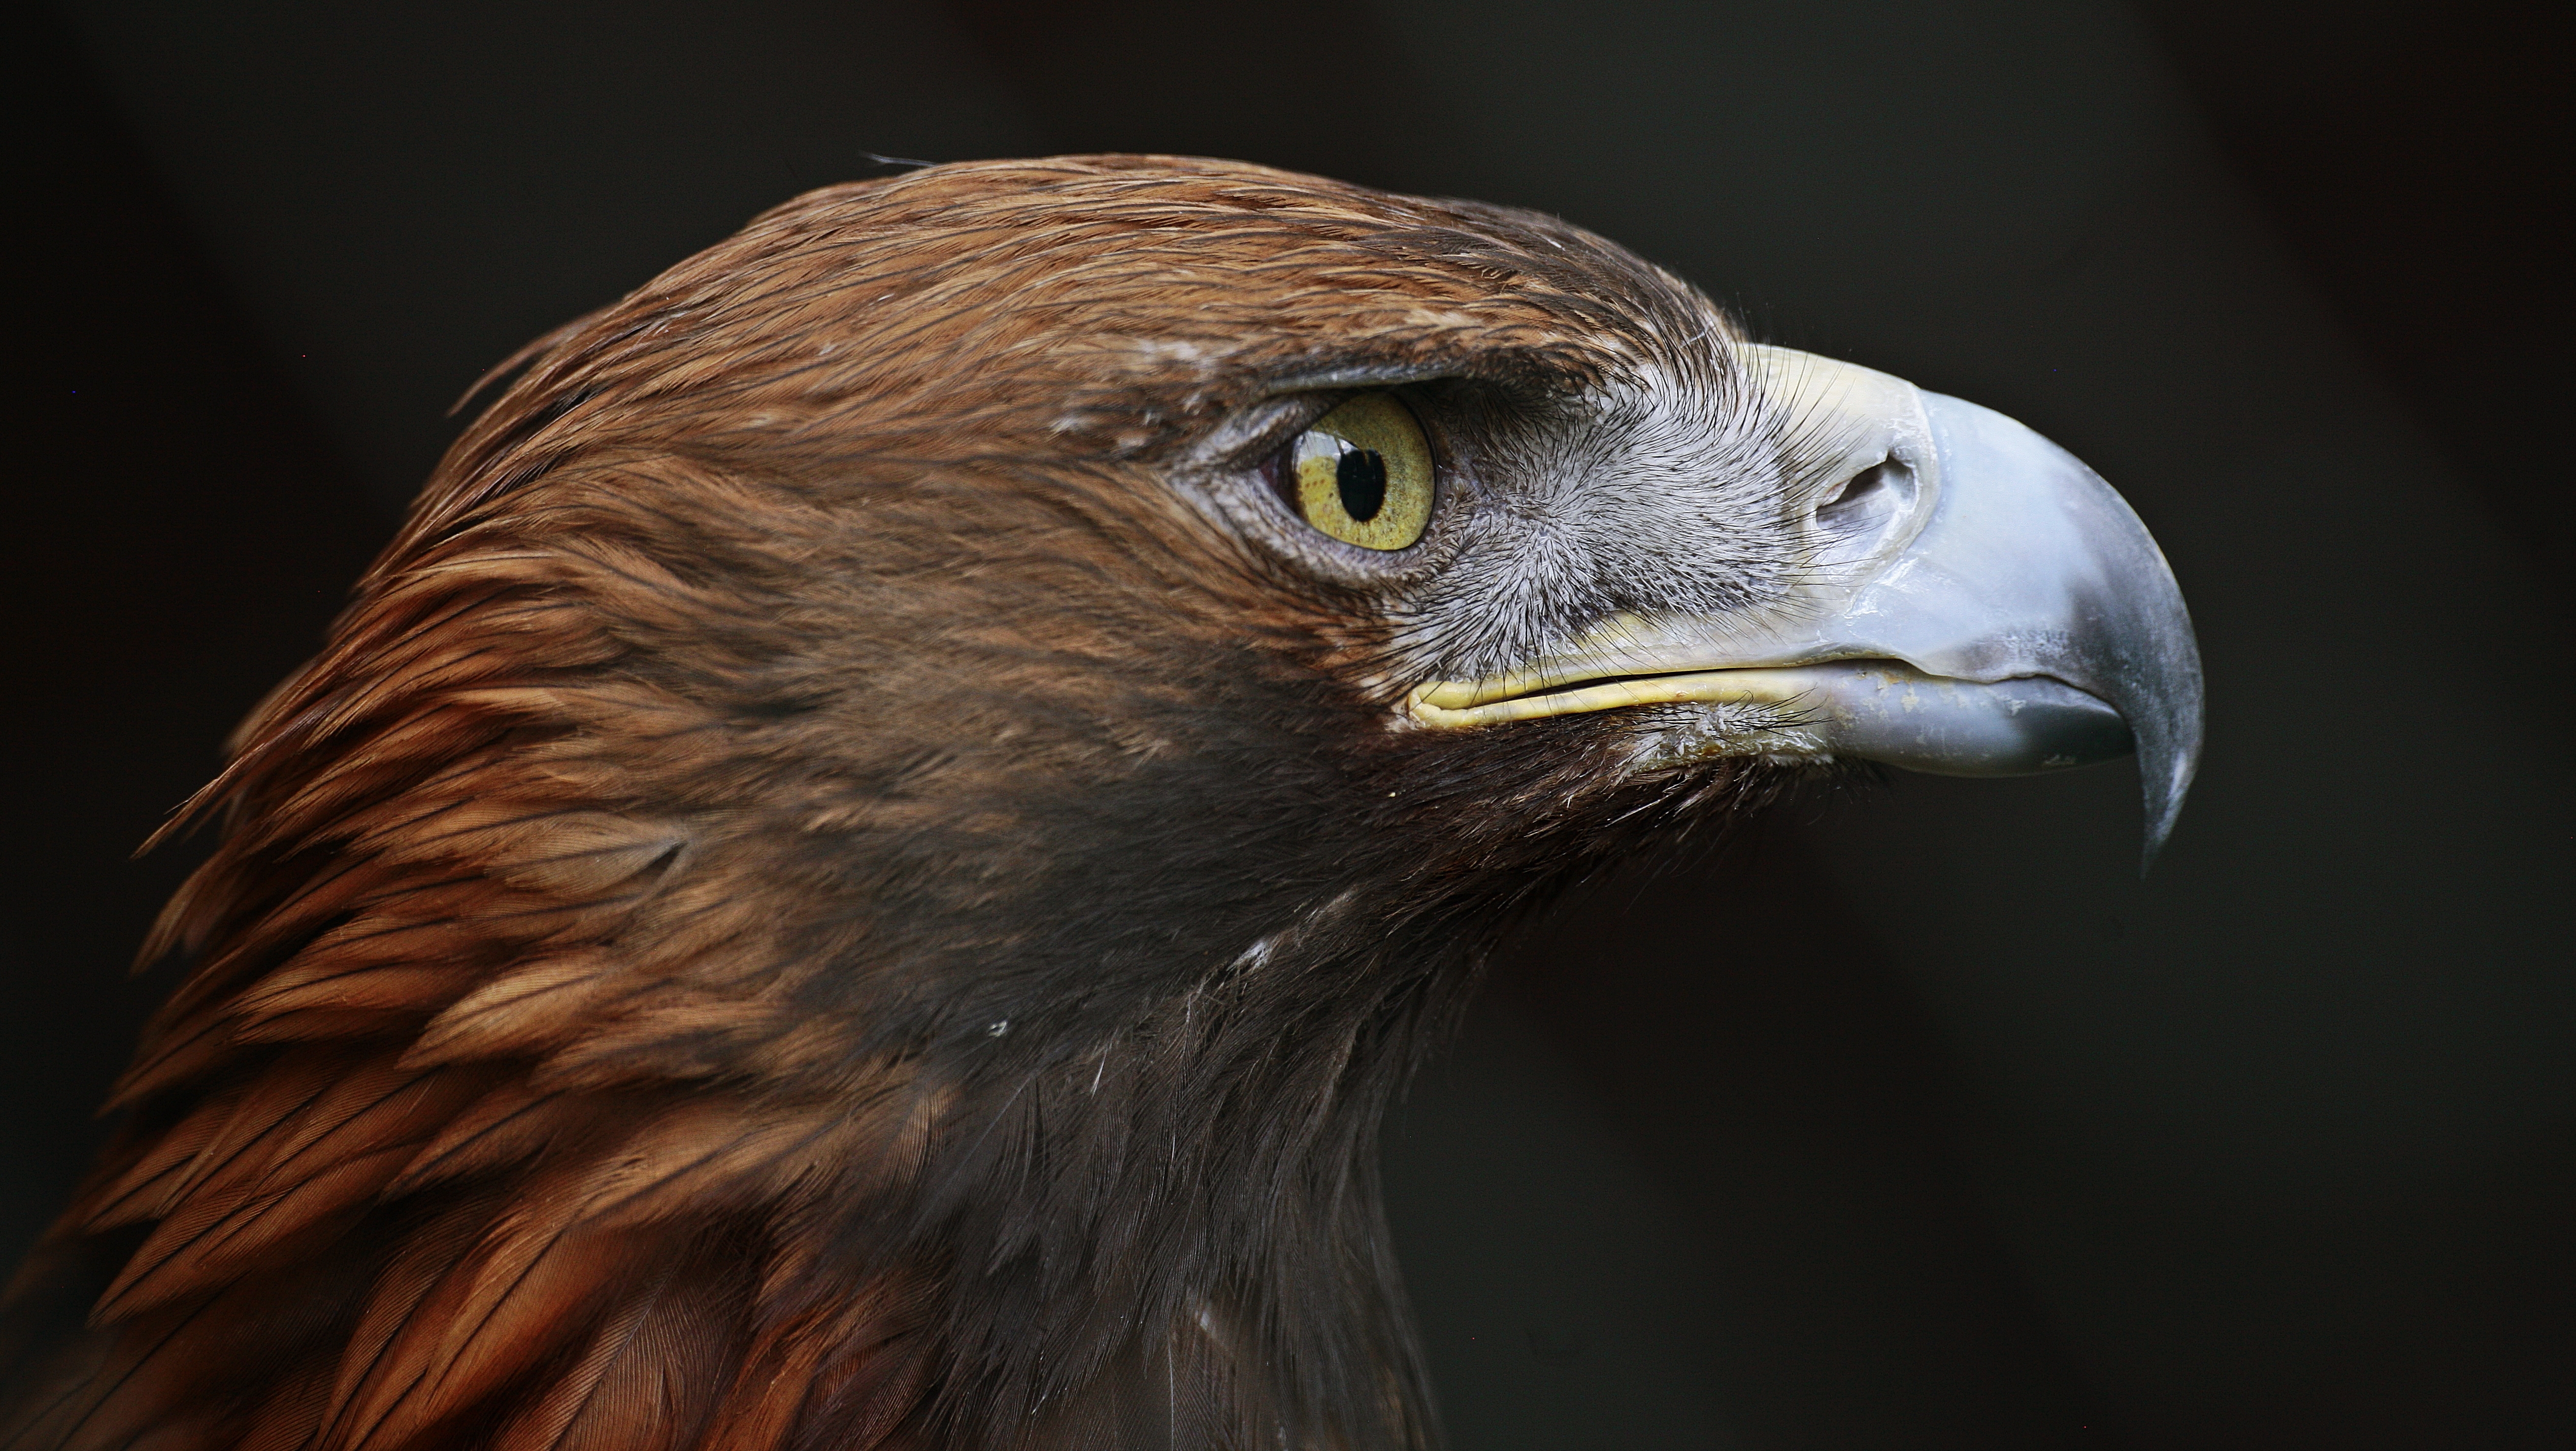 1532675 descargar imagen águila real, animales, ave, águila, aves: fondos de pantalla y protectores de pantalla gratis